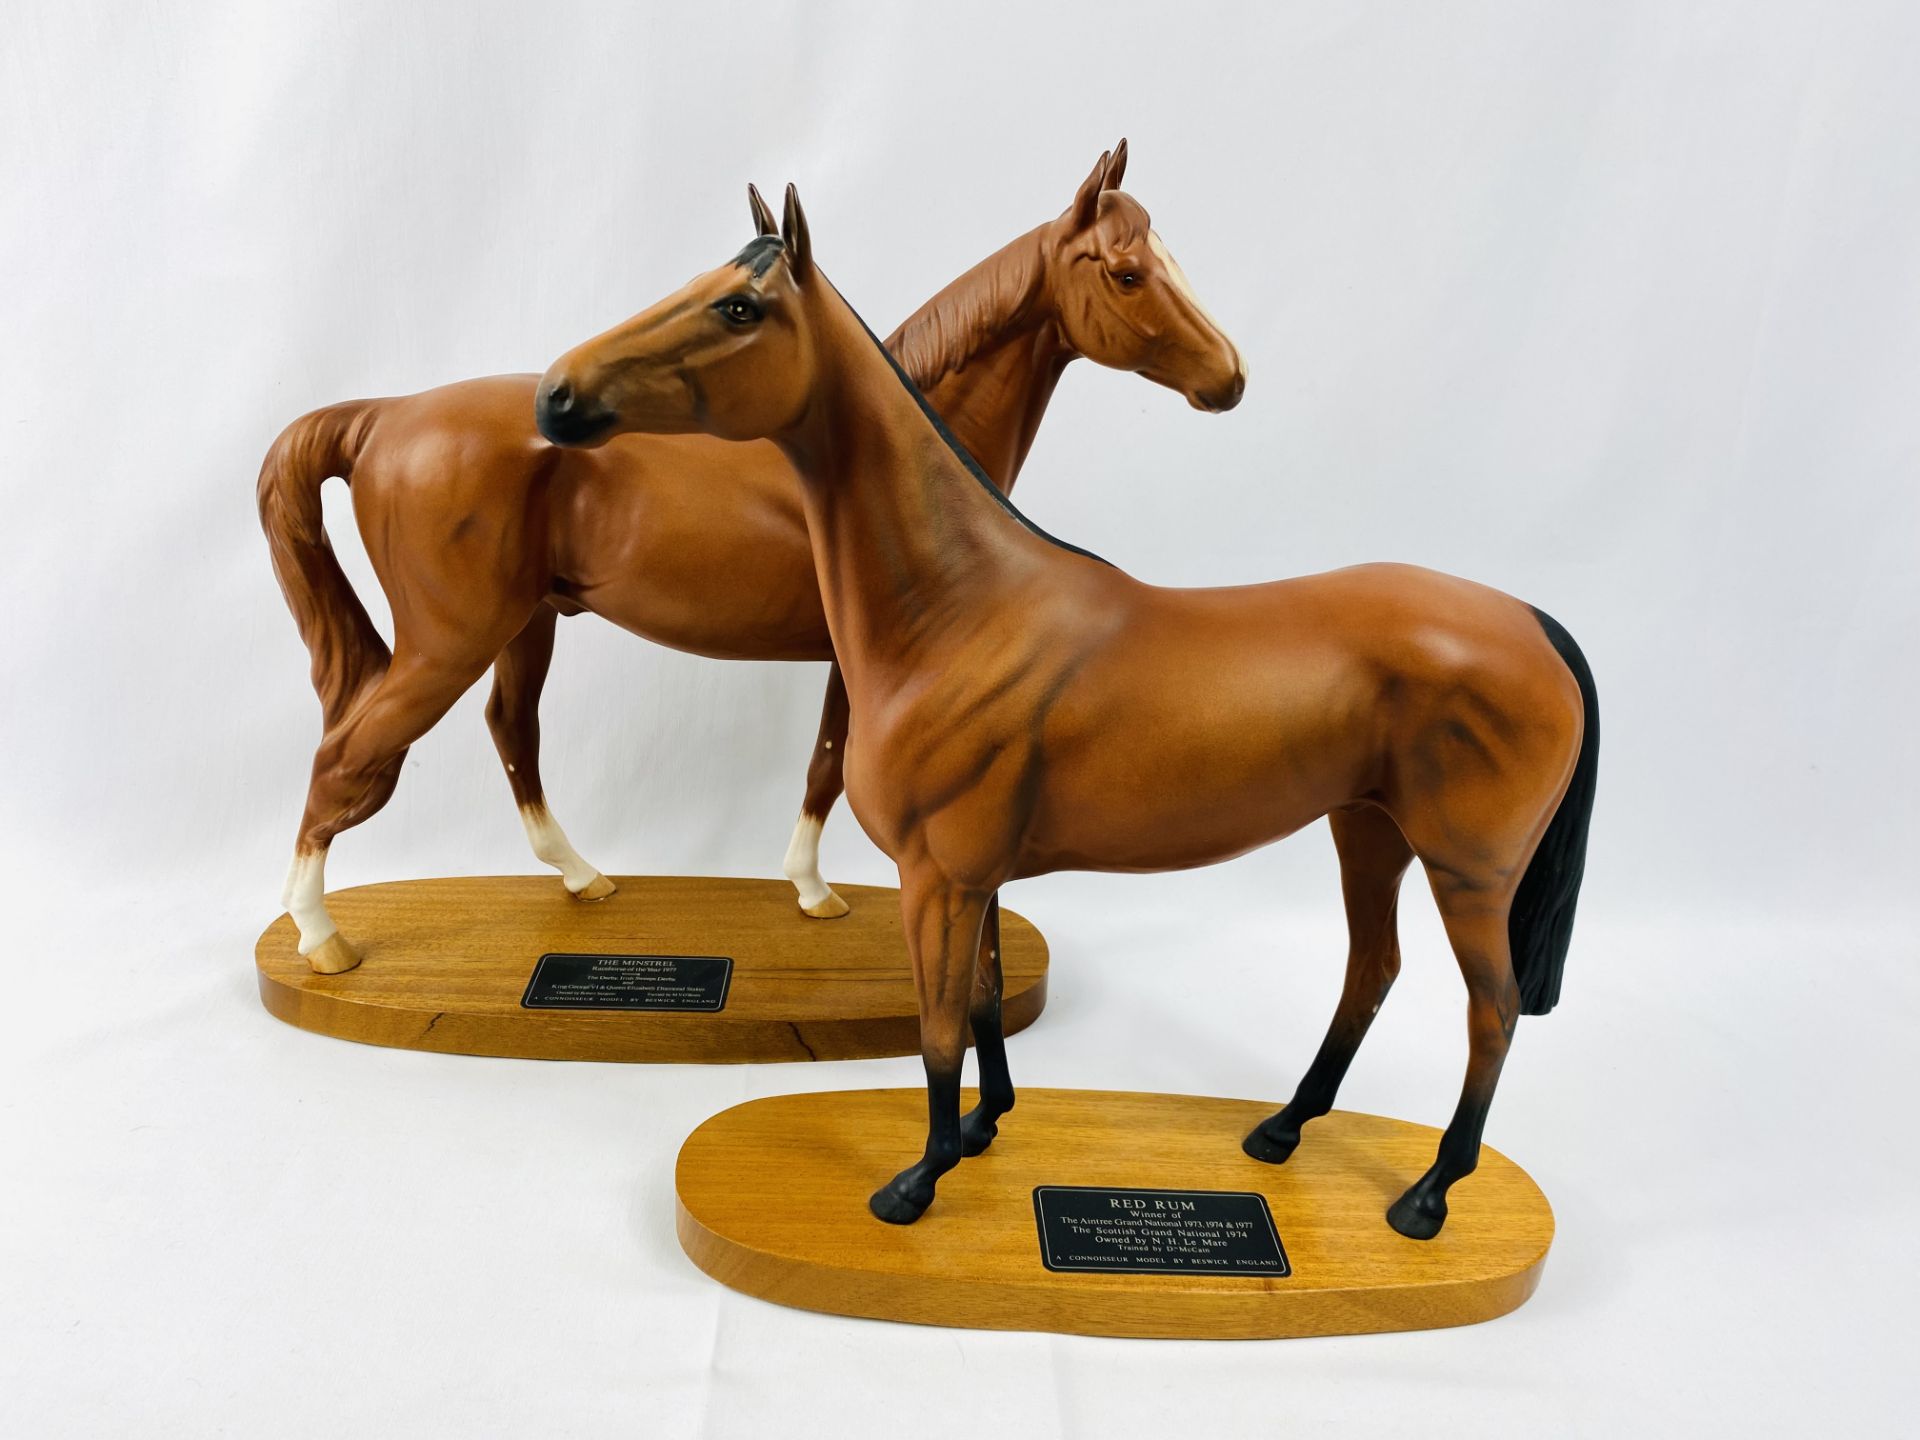 Two Beswick ceramic models of racehorses